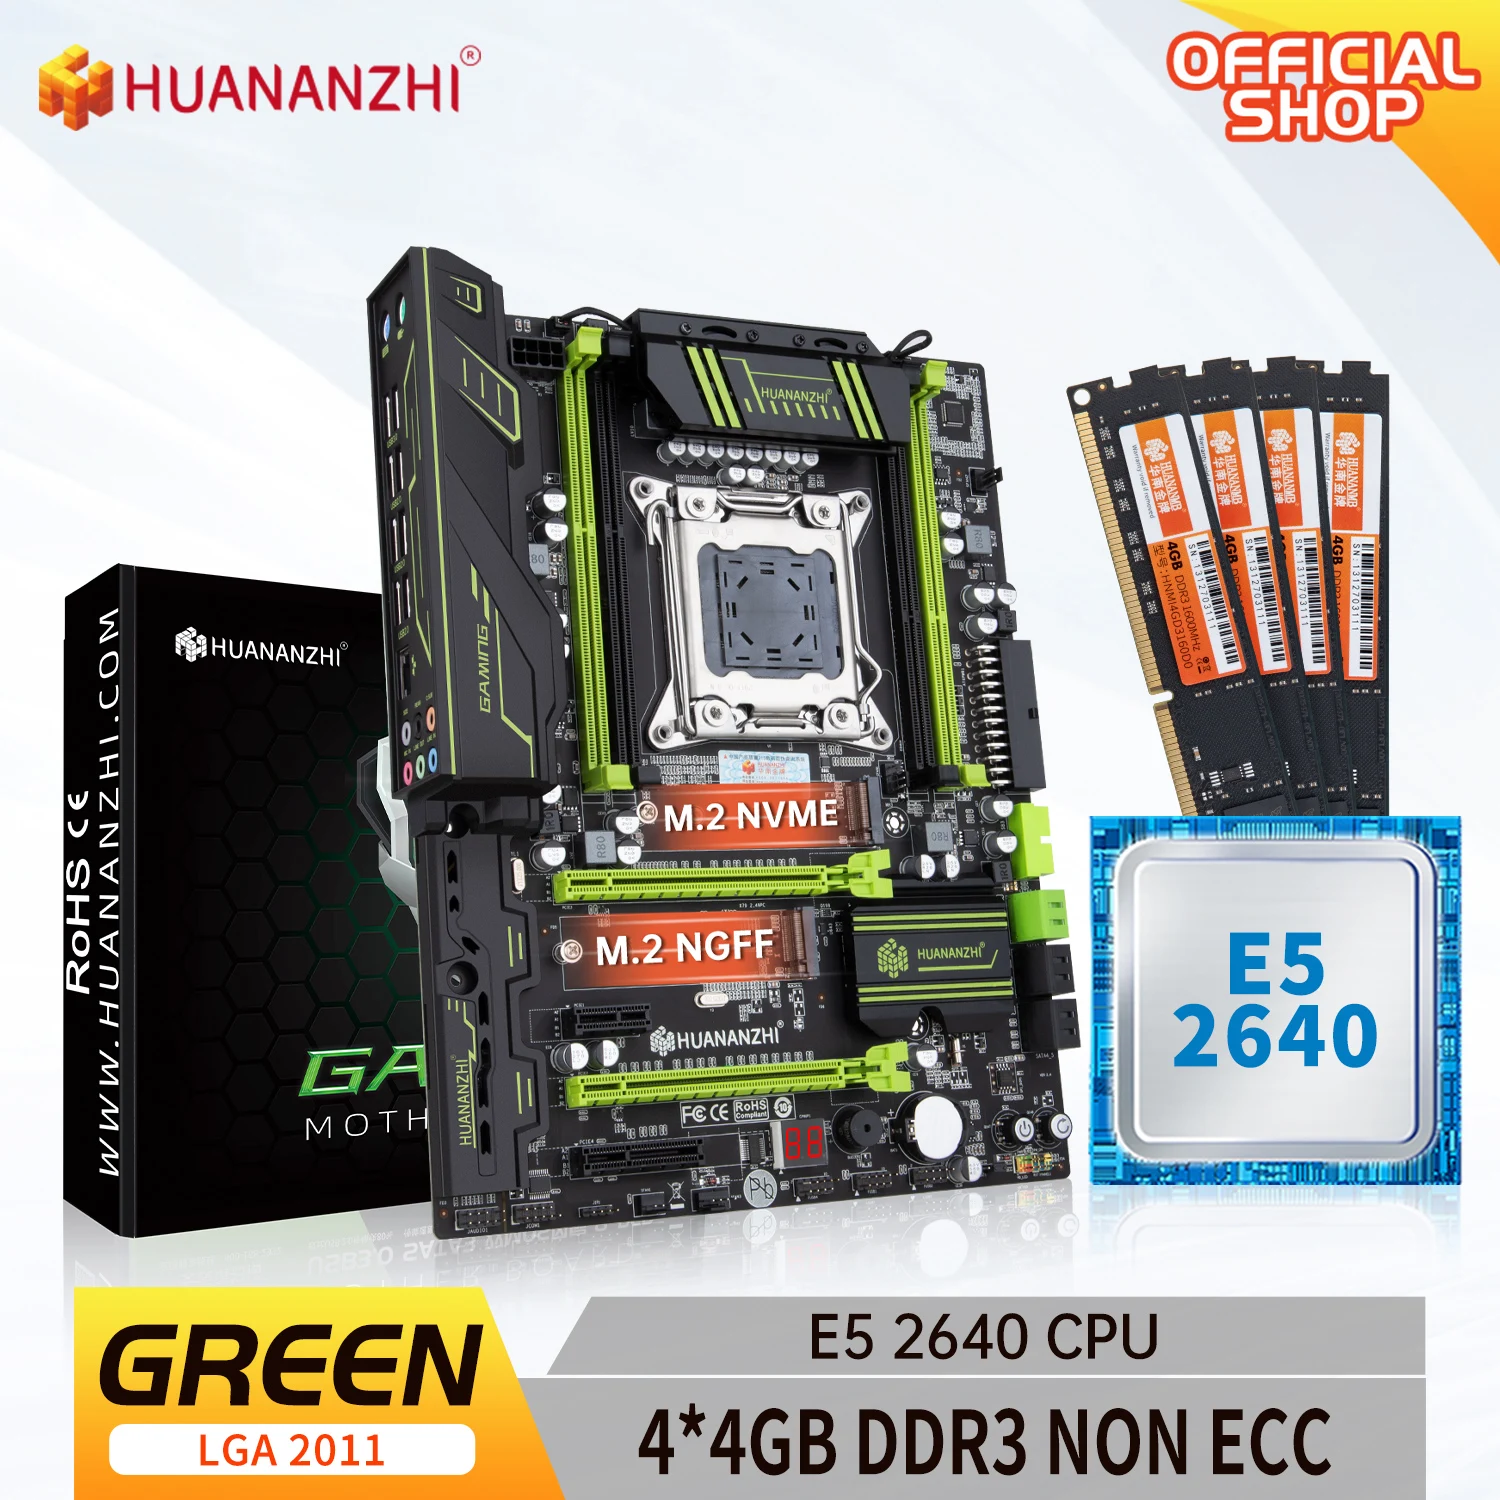 

HUANANZHI GREEN 2.49 LGA 2011 motherboard with Intel XEON E5 2640 with 4*4G DDR3 NON-ECC memory combo kit set SATA USB 3.0